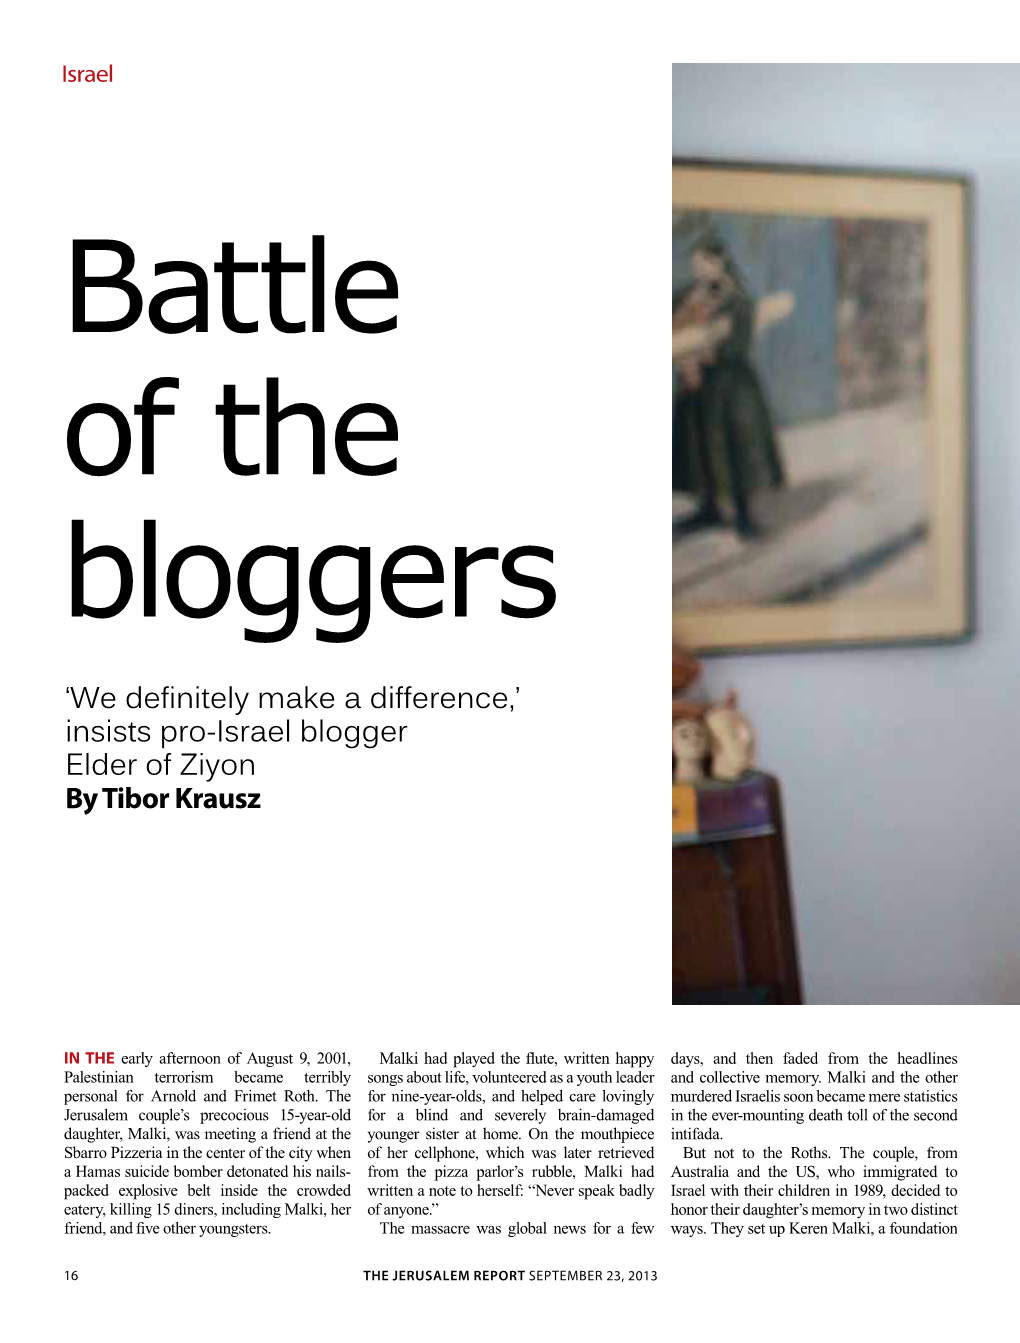 Insists Pro-Israel Blogger Elder of Ziyon by Tibor Krausz